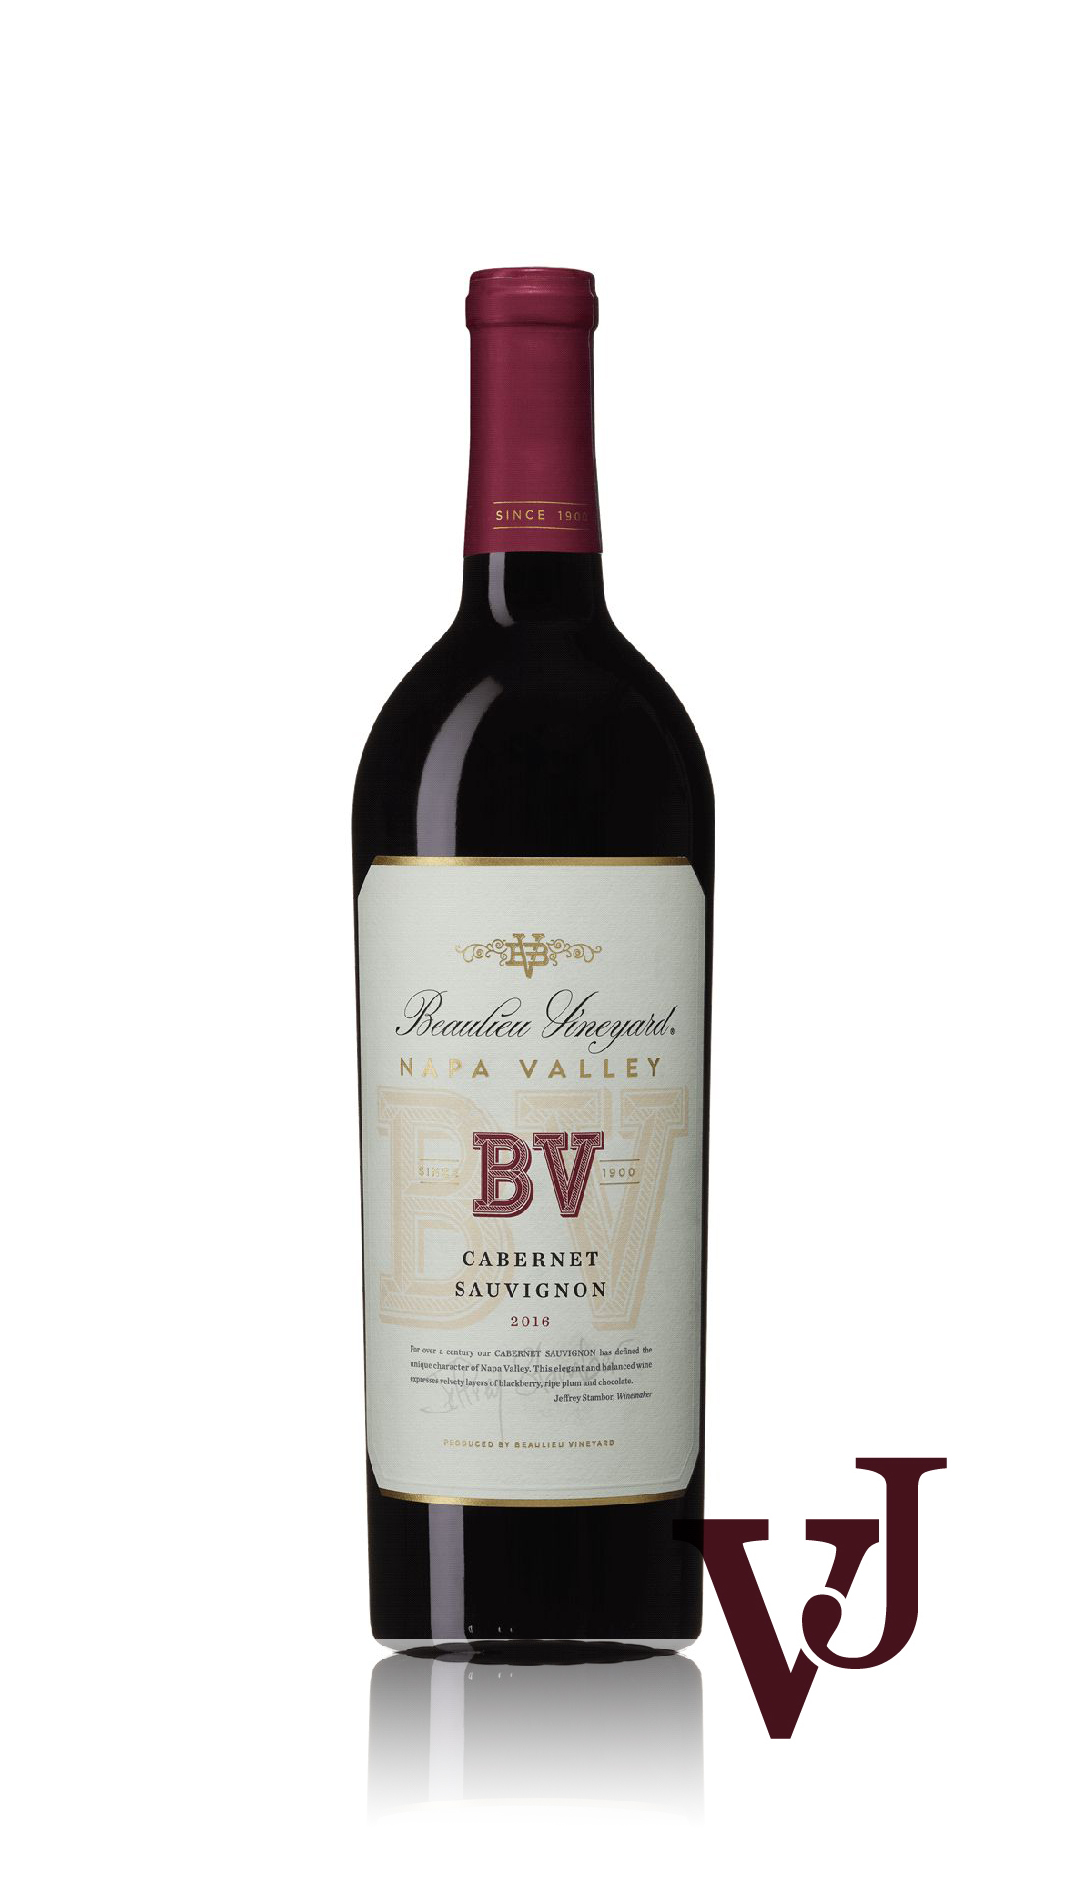 Rött Vin - Beaulieu Vineyard Napa Valley Cabernet Sauvignon 2016 artikel nummer 7133101 från producenten Beaulieu Vineyard från området USA